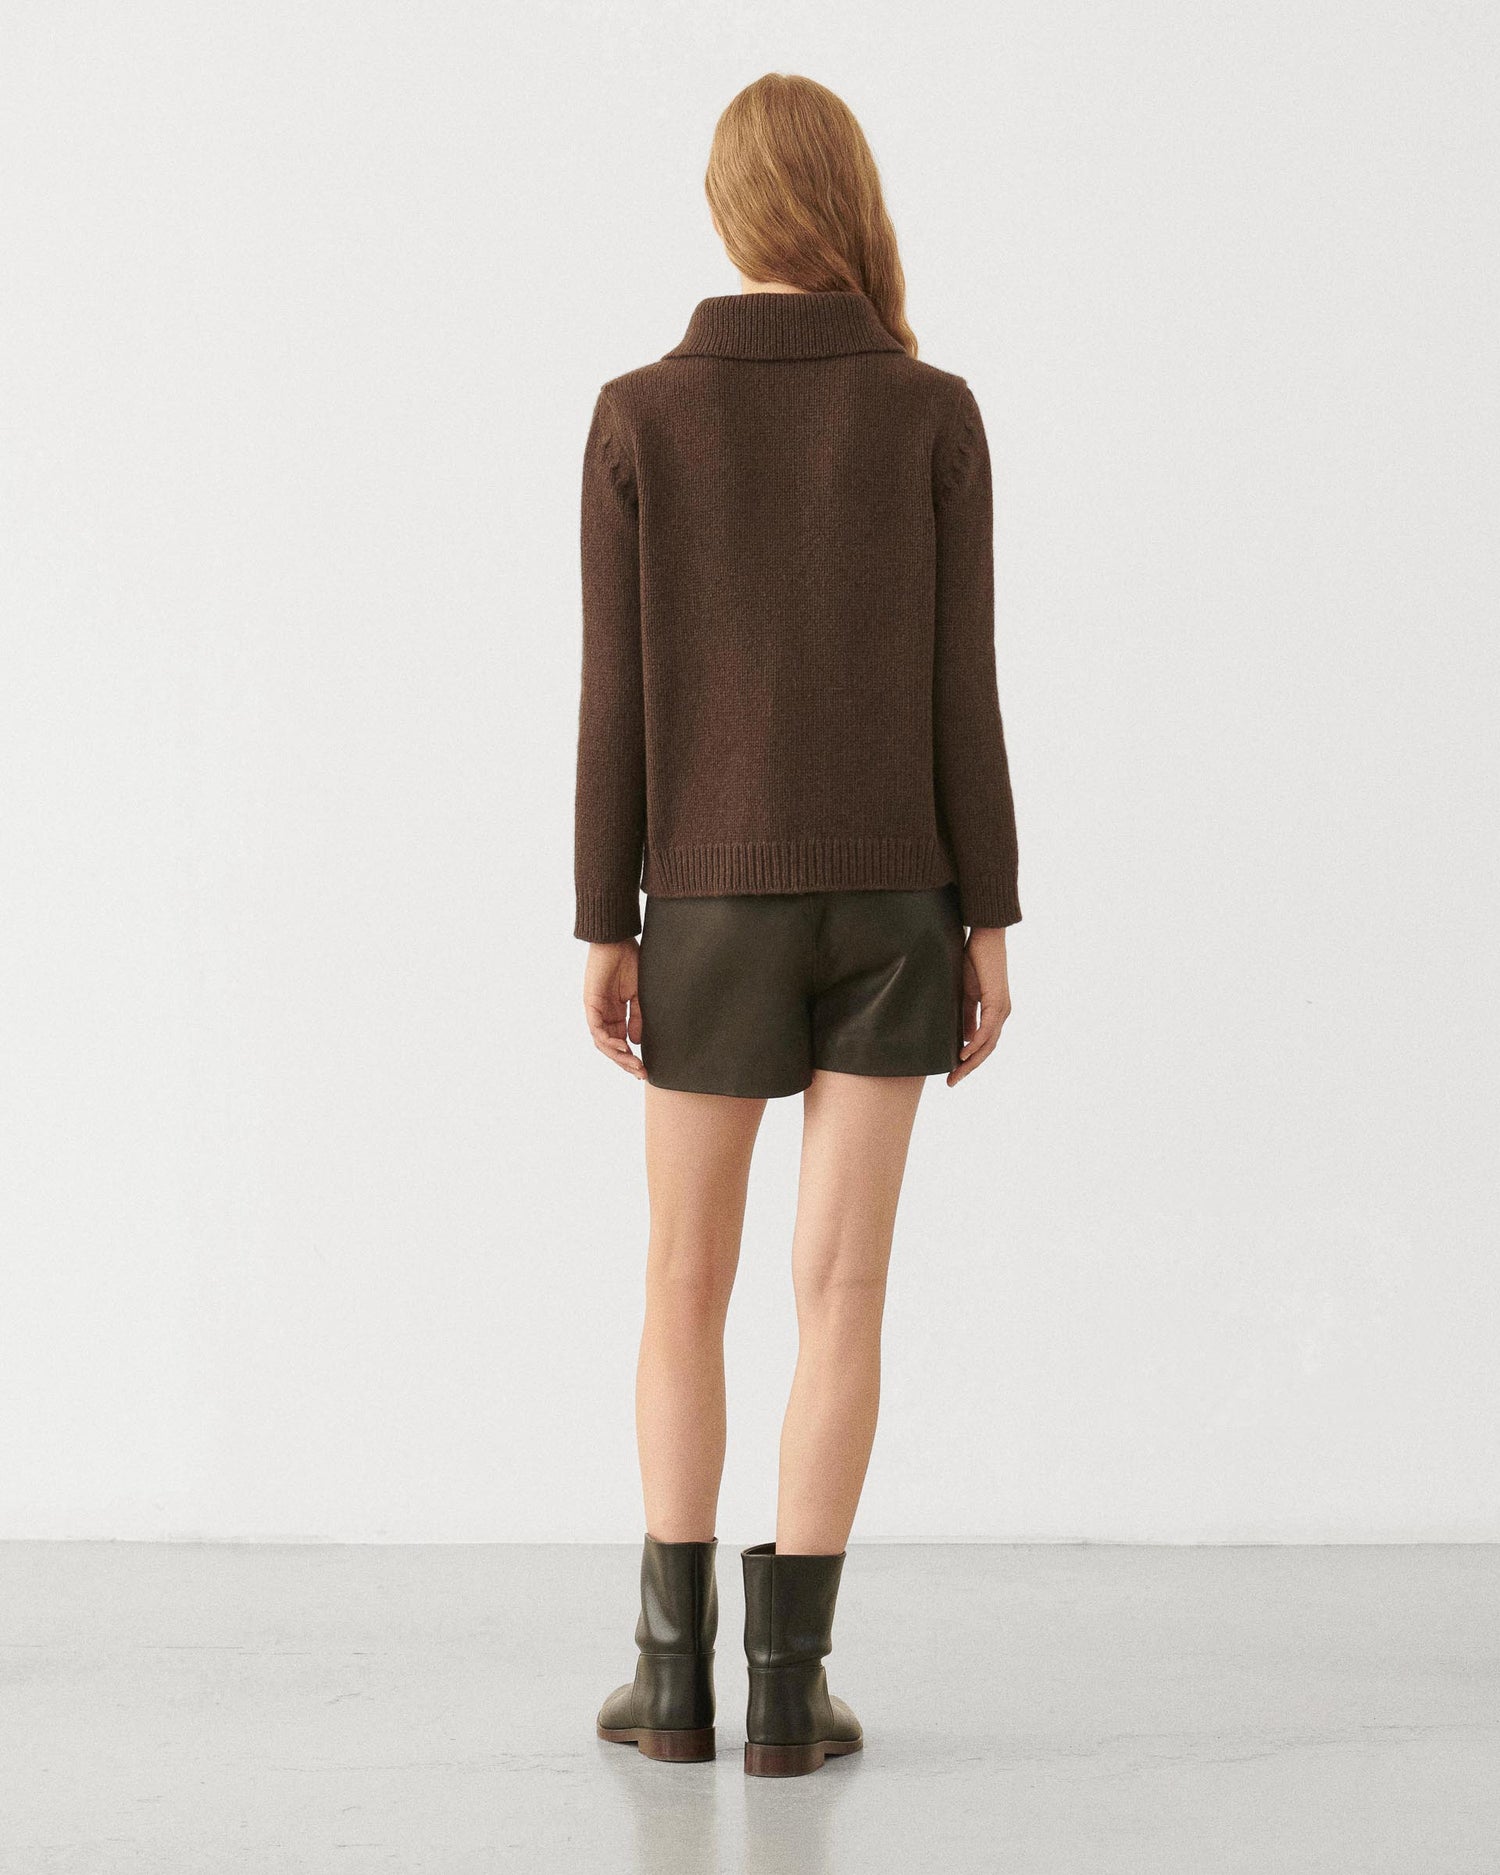 Ana Sweater in Cashmere, Chocolate